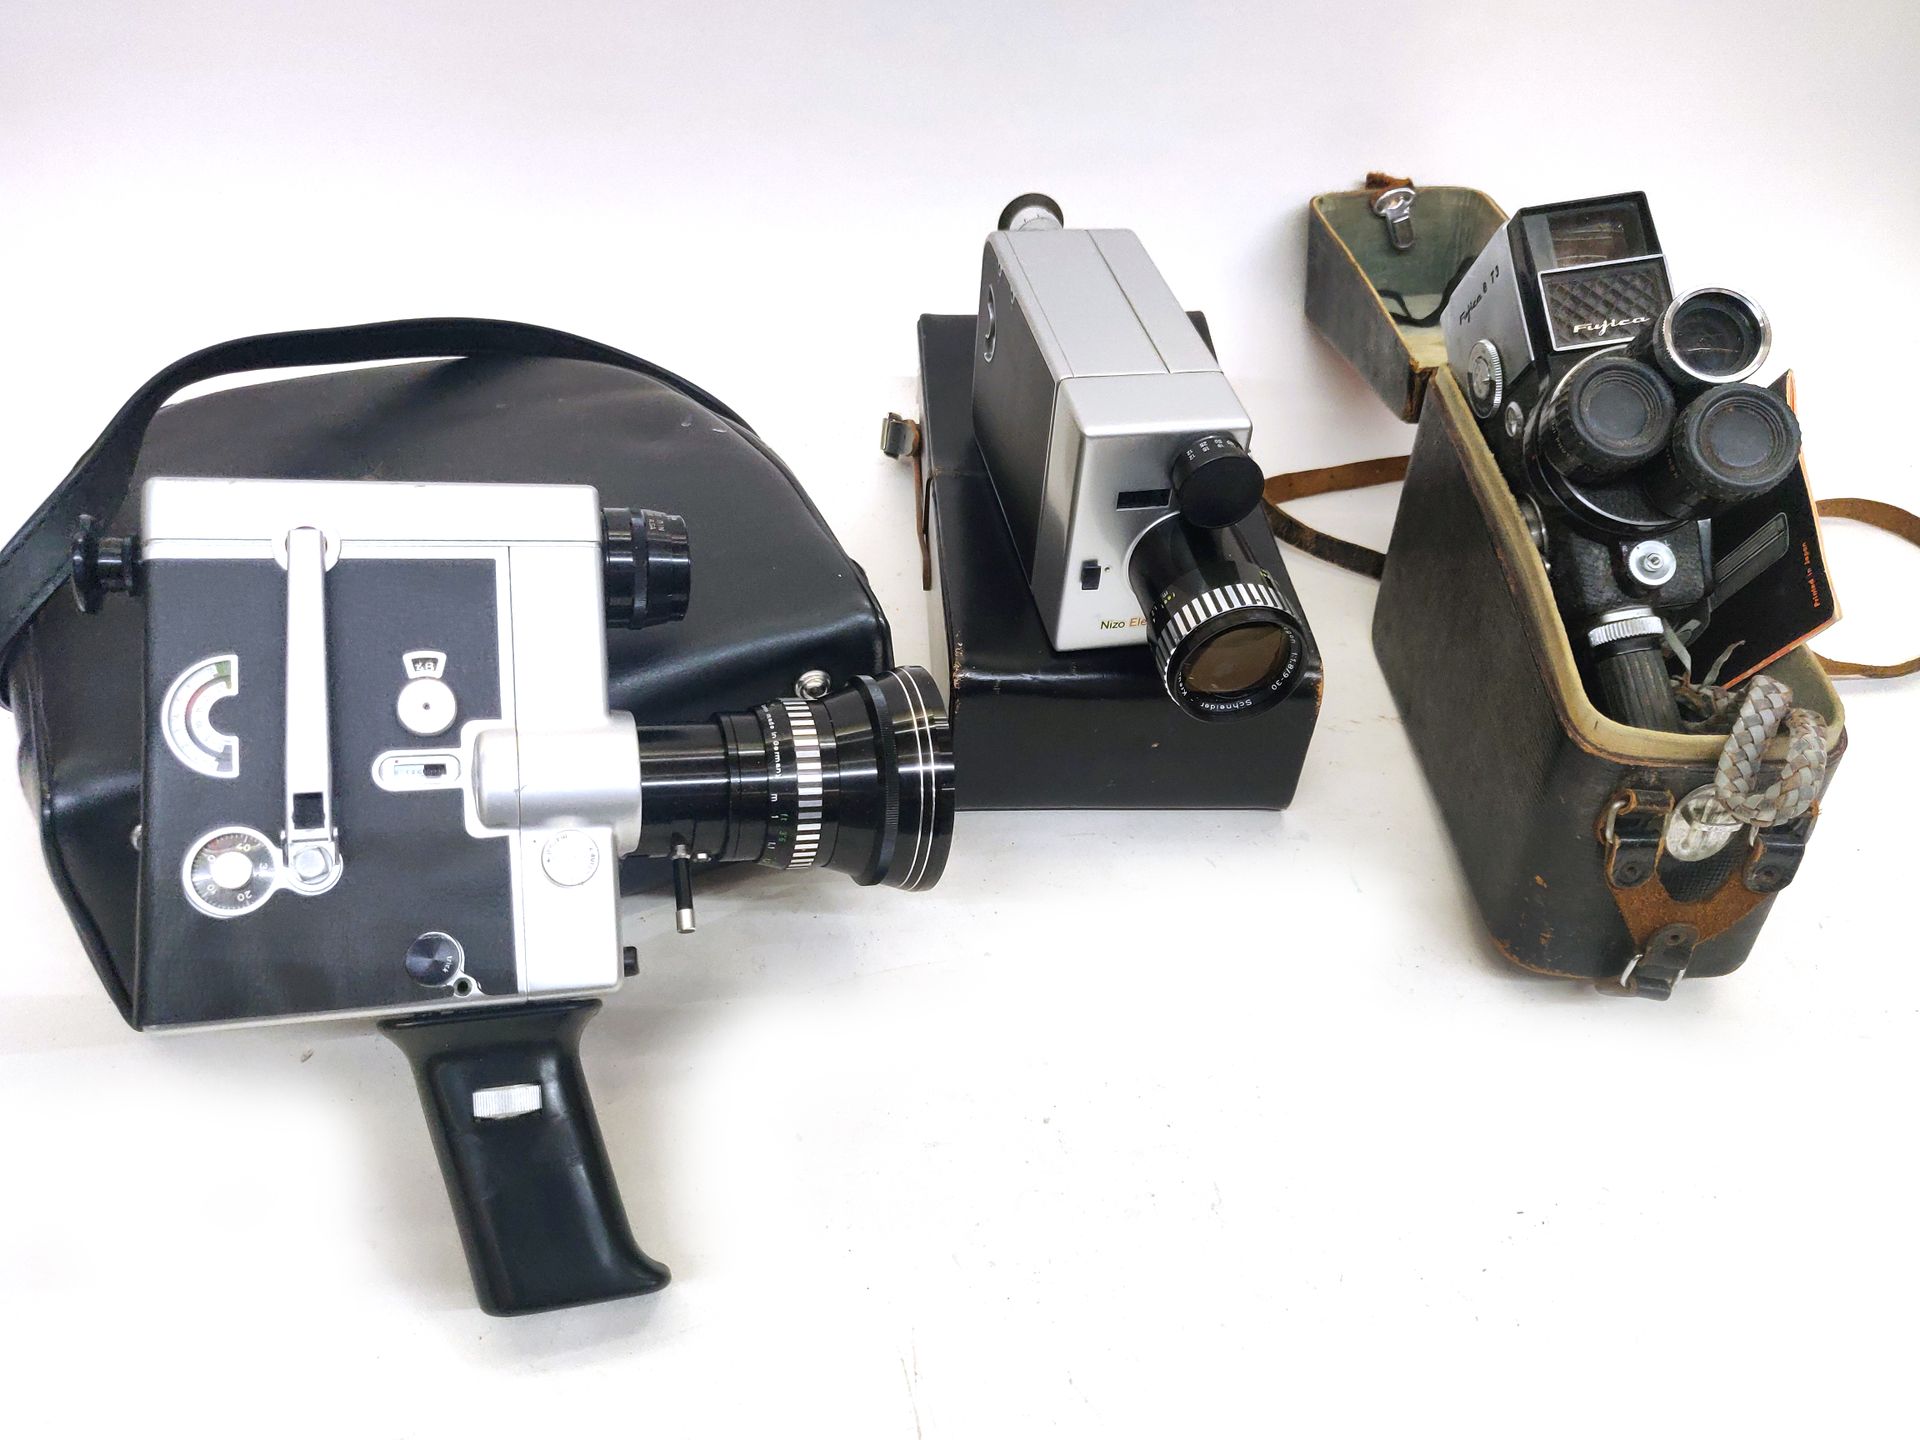 Null 电影院，电影设备。一套三个不同的相机：Nizo FA3，Nizo Electronic和Fujica 8T3。